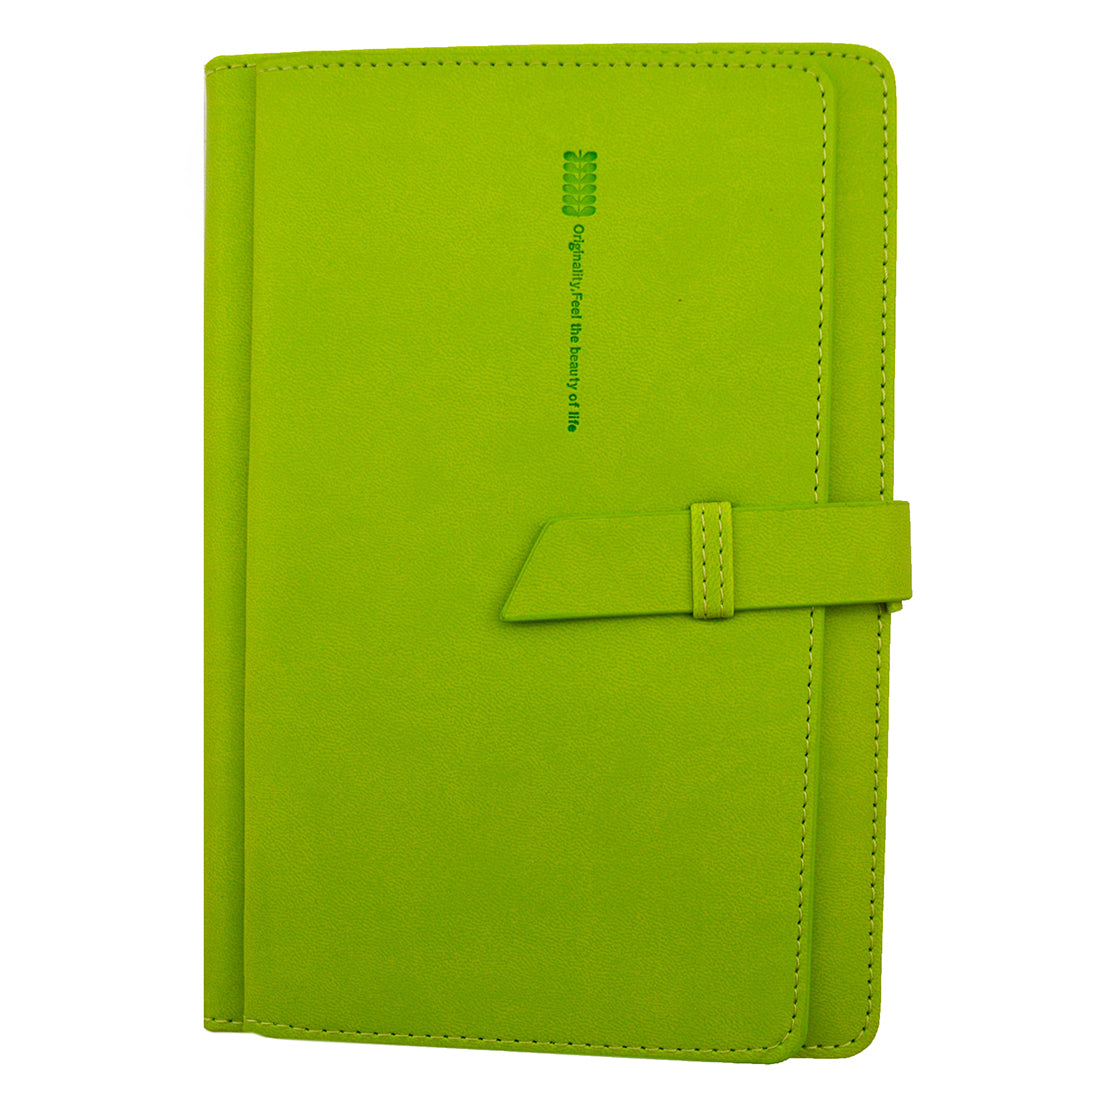 Leather Wallet - Green - Original Source